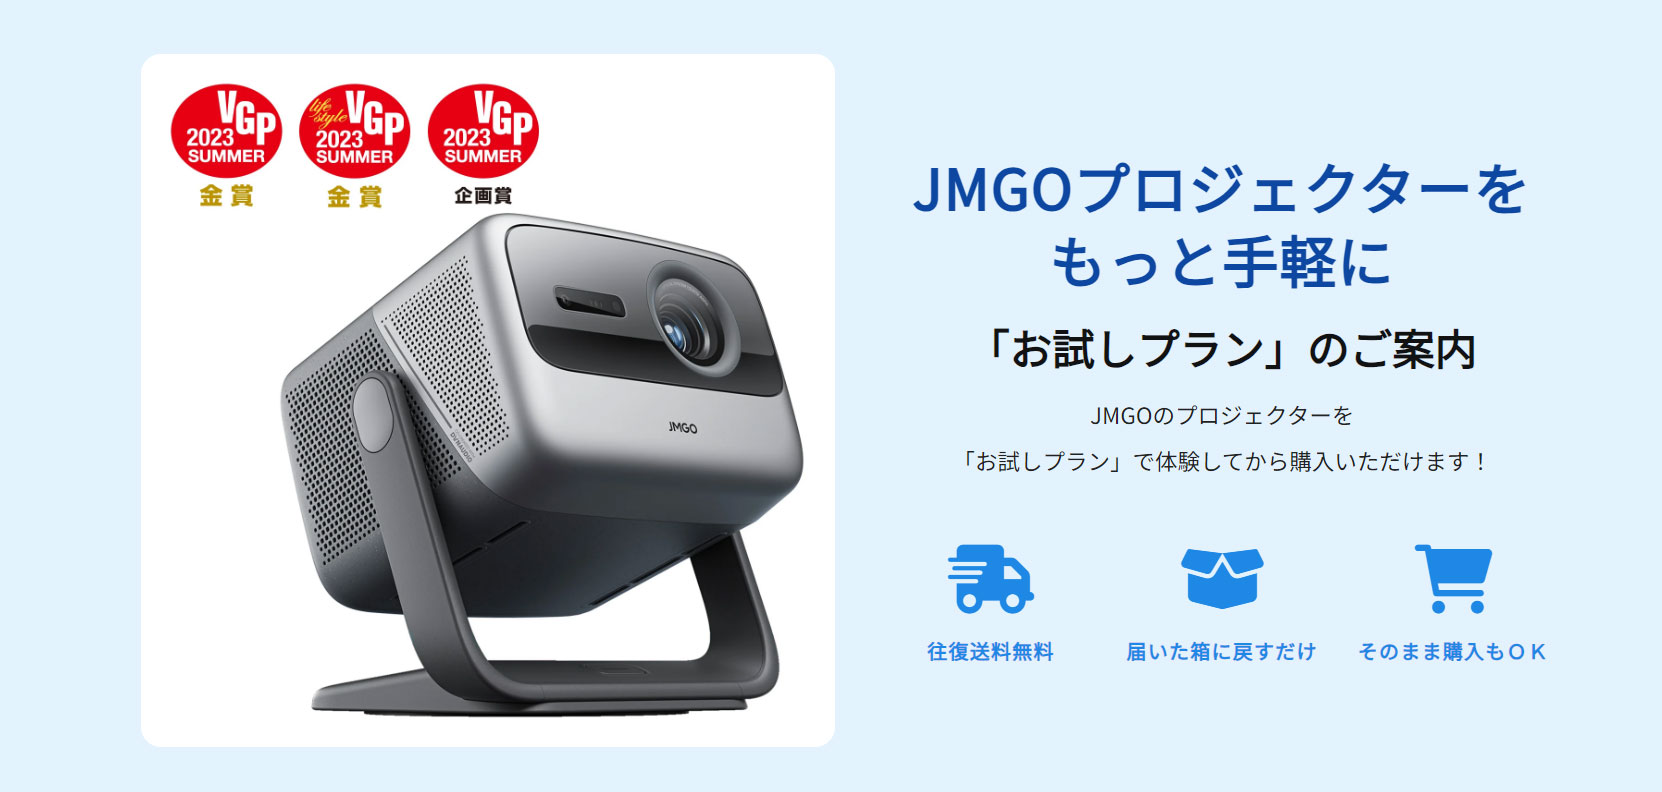 JMGO最新3色レーザー4KプロジェクターJMGO N1 Ultraなど5機種